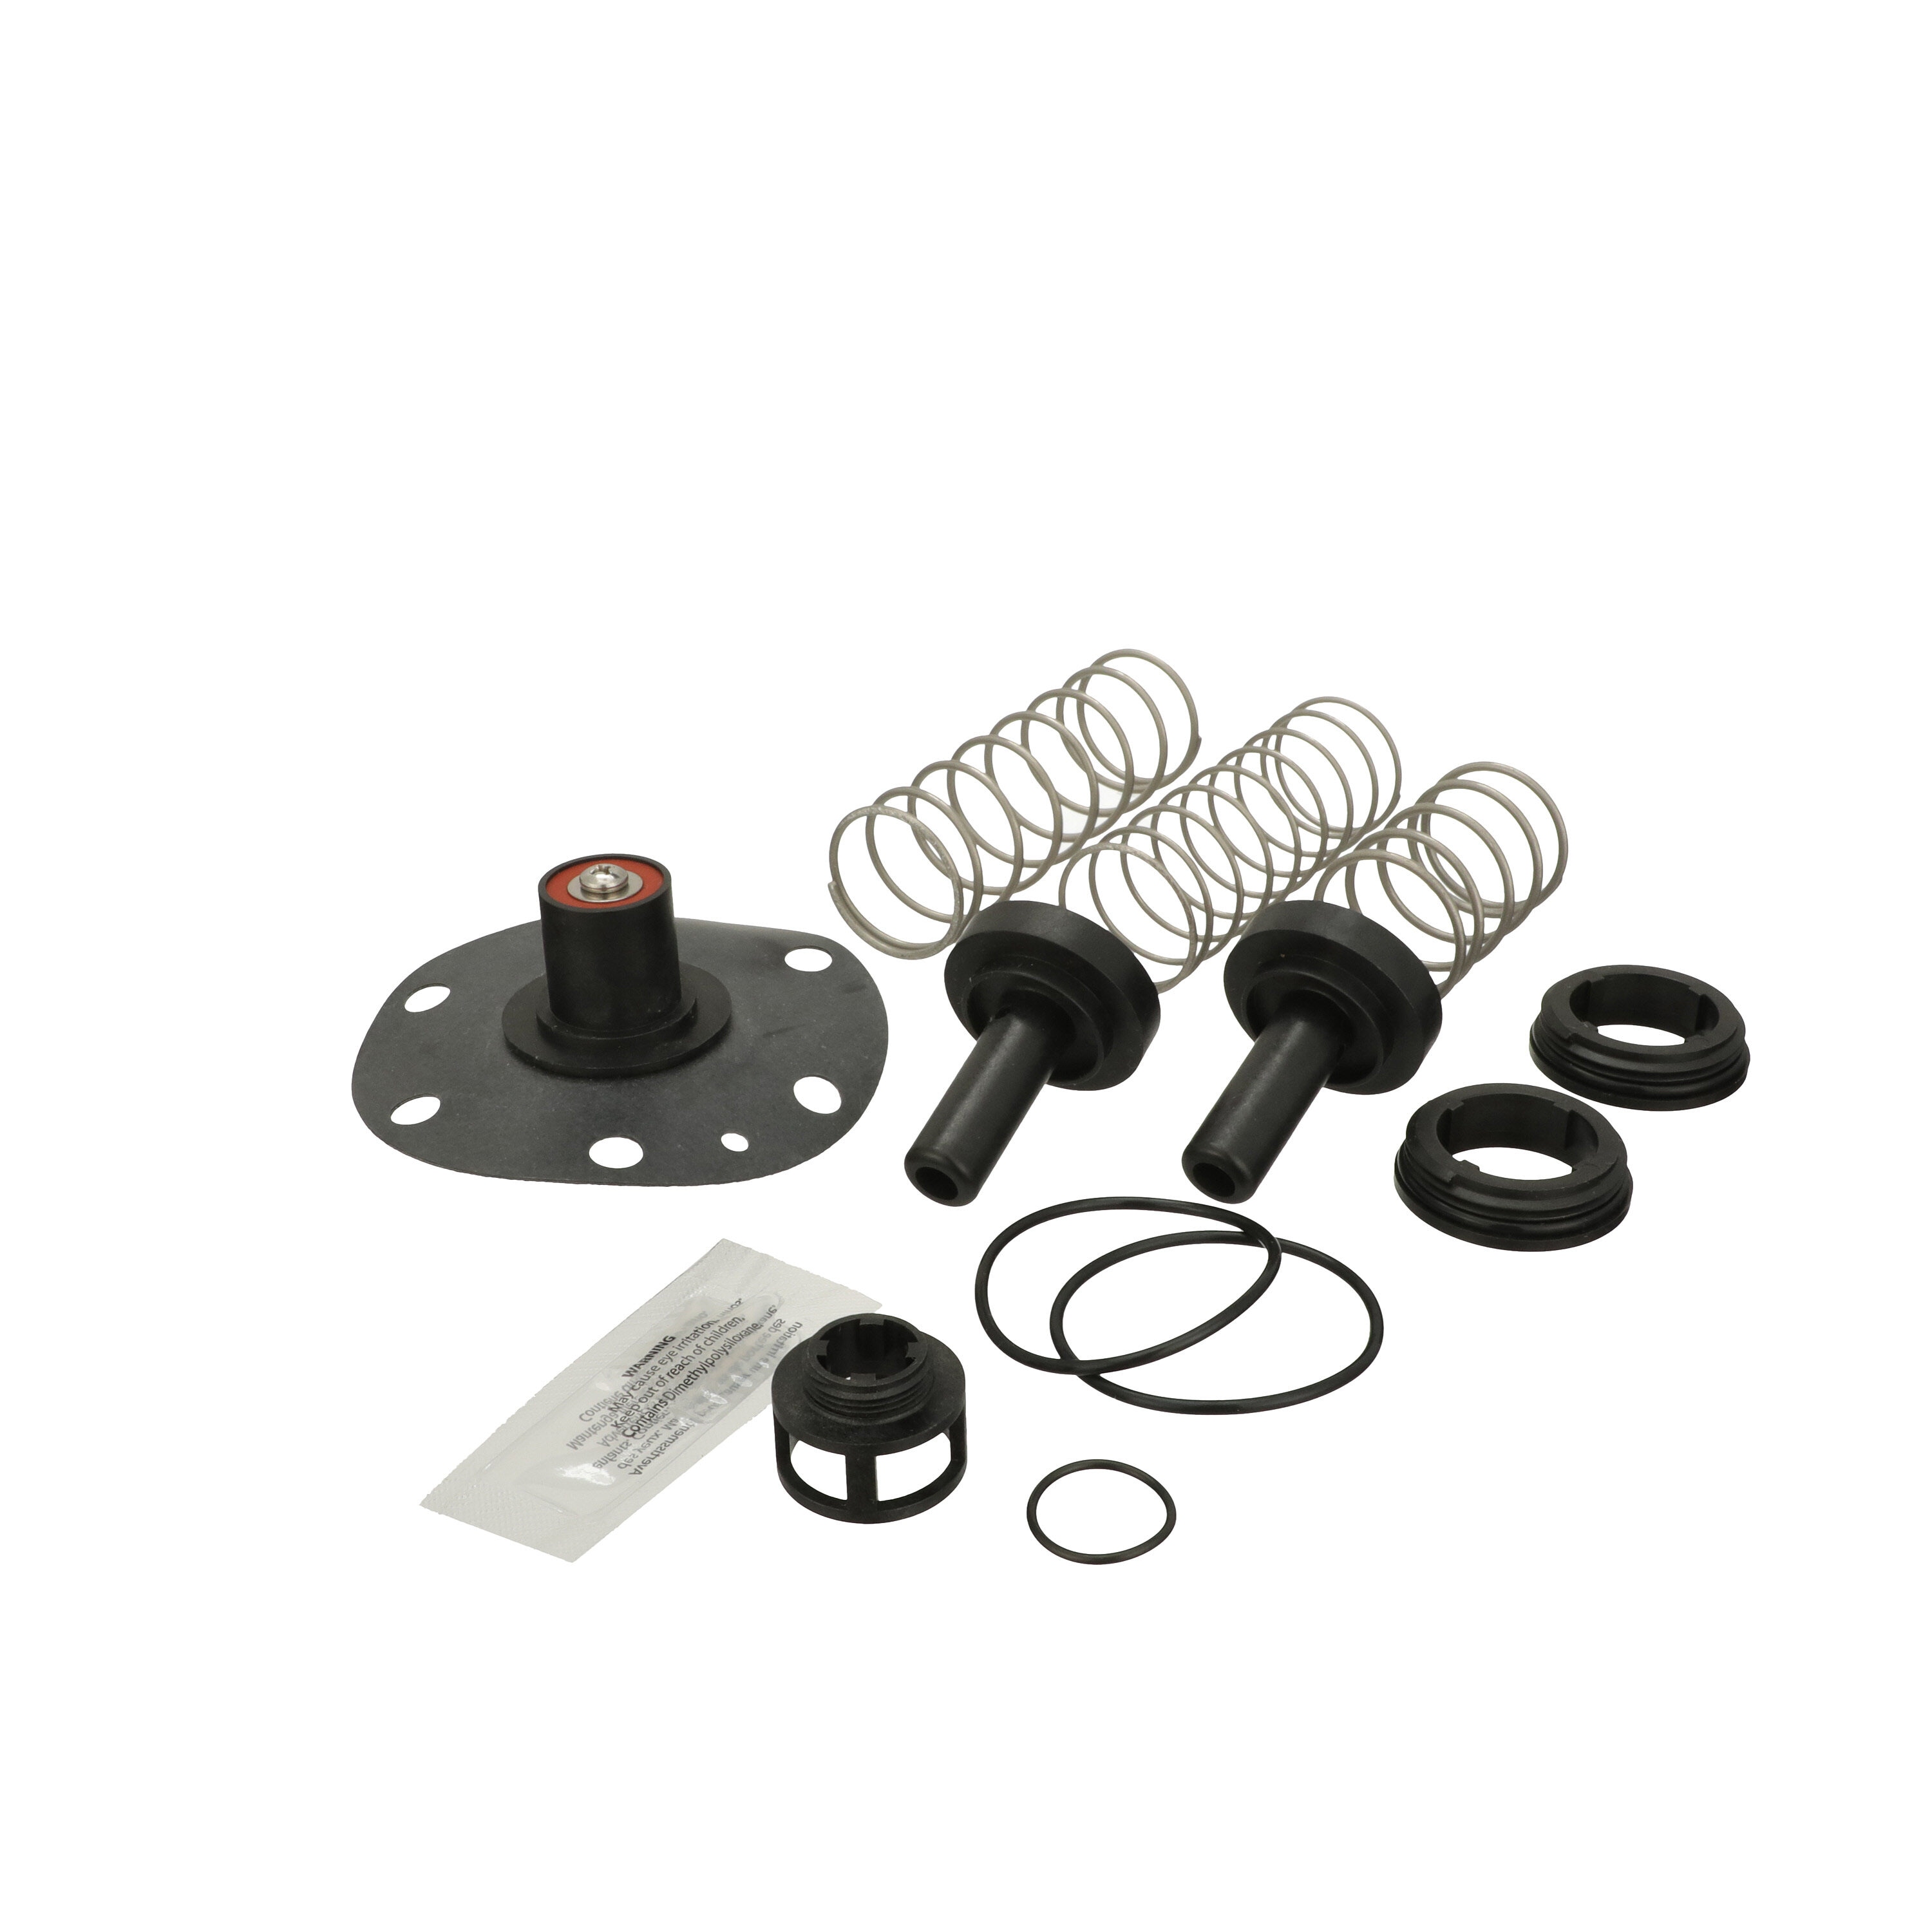 Zurn Wilkins Universal Hydrant Repair Kit for Model 975XL Backflow